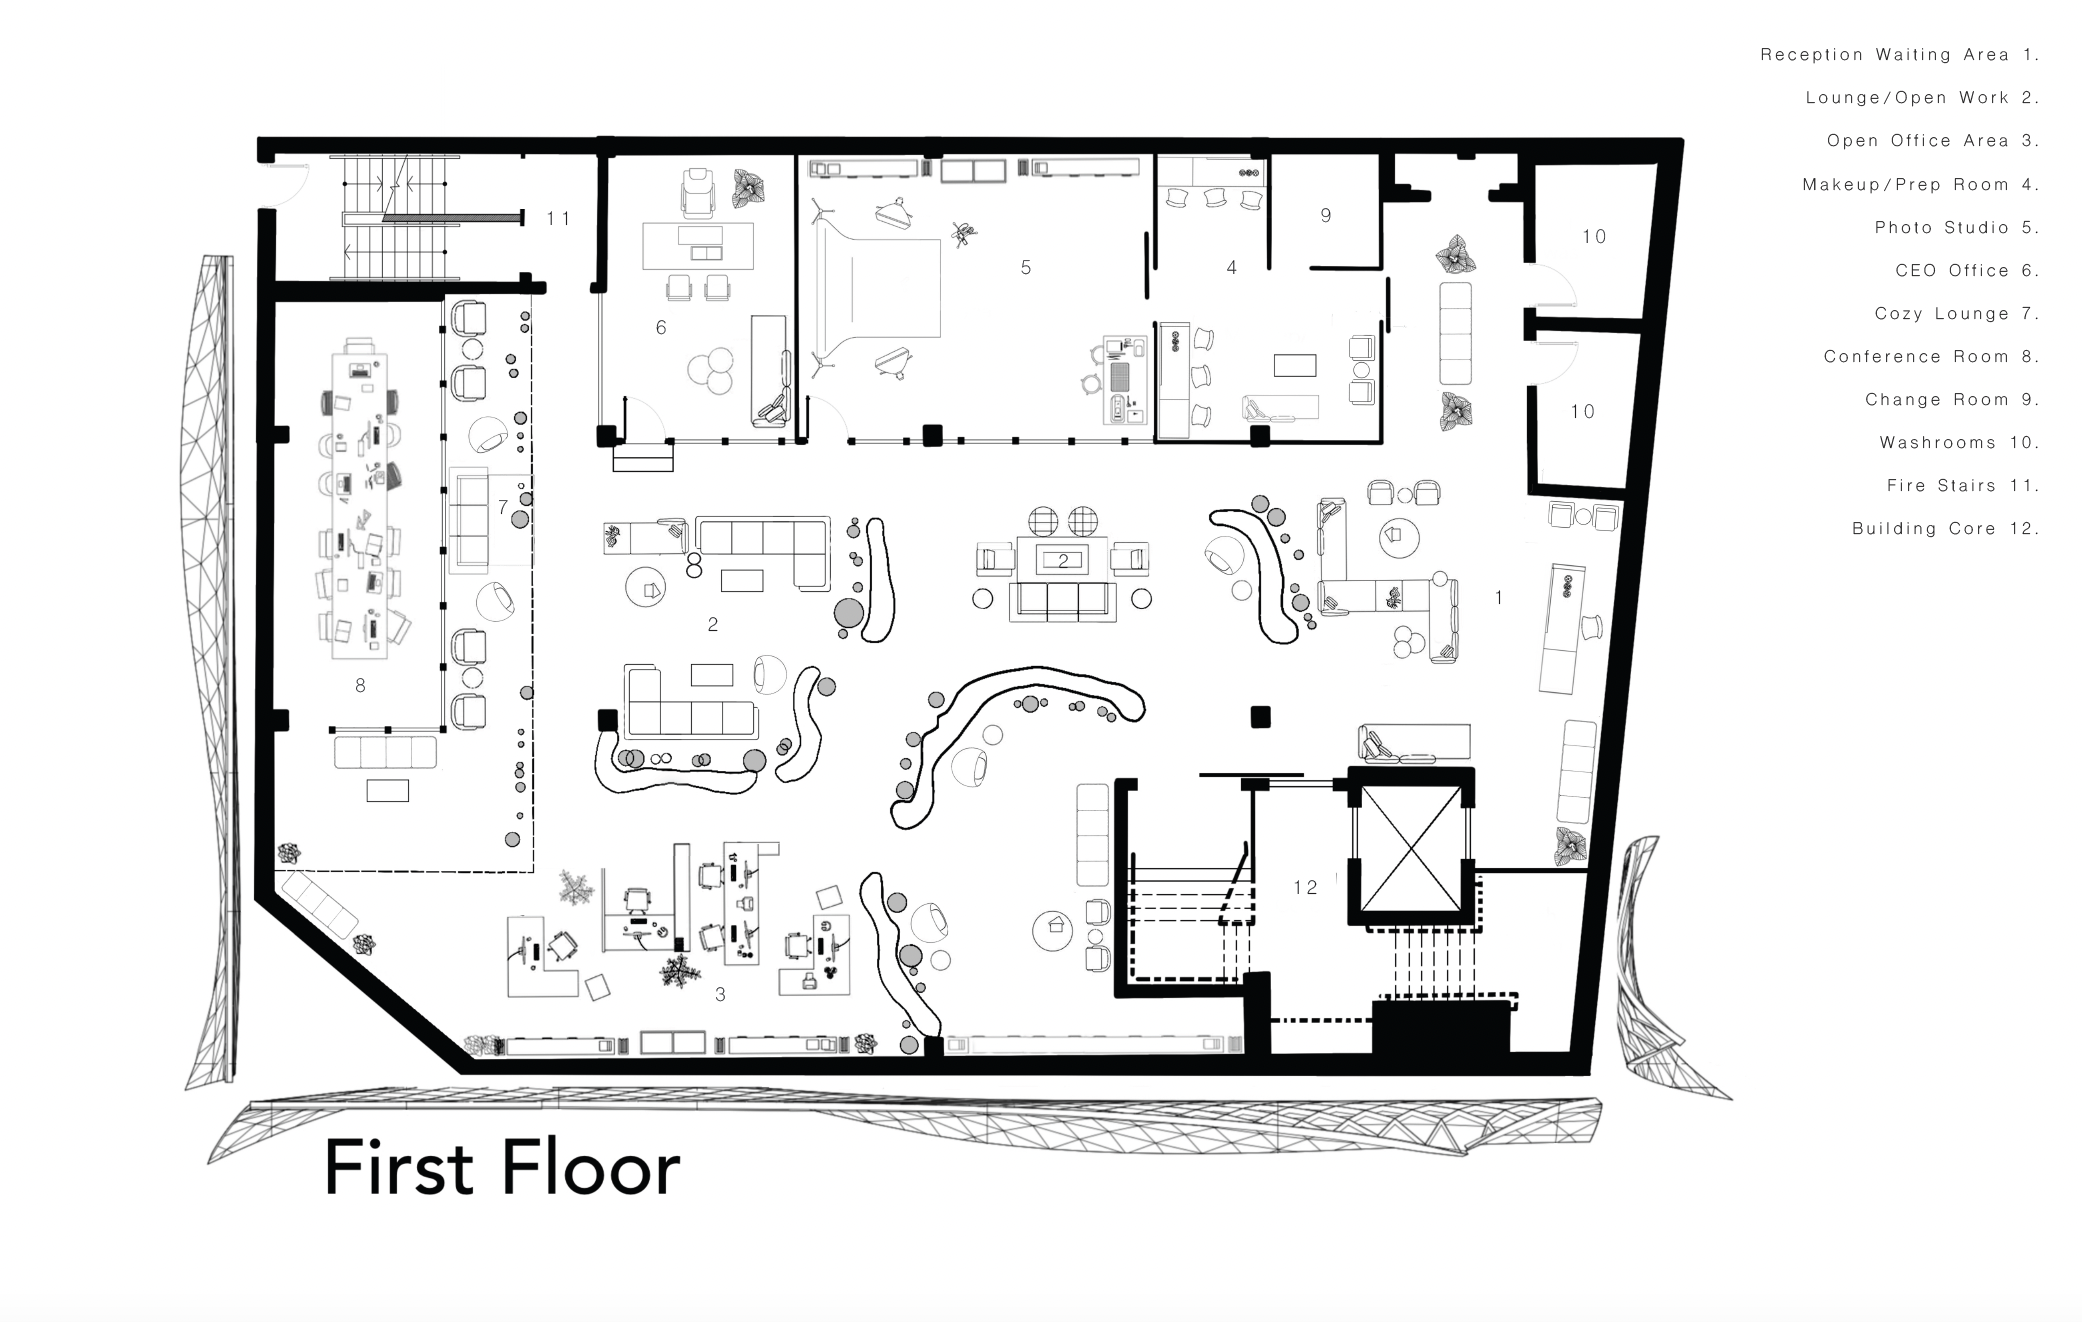 First Floor Plan (Amanda Stan/Justin Crowell)